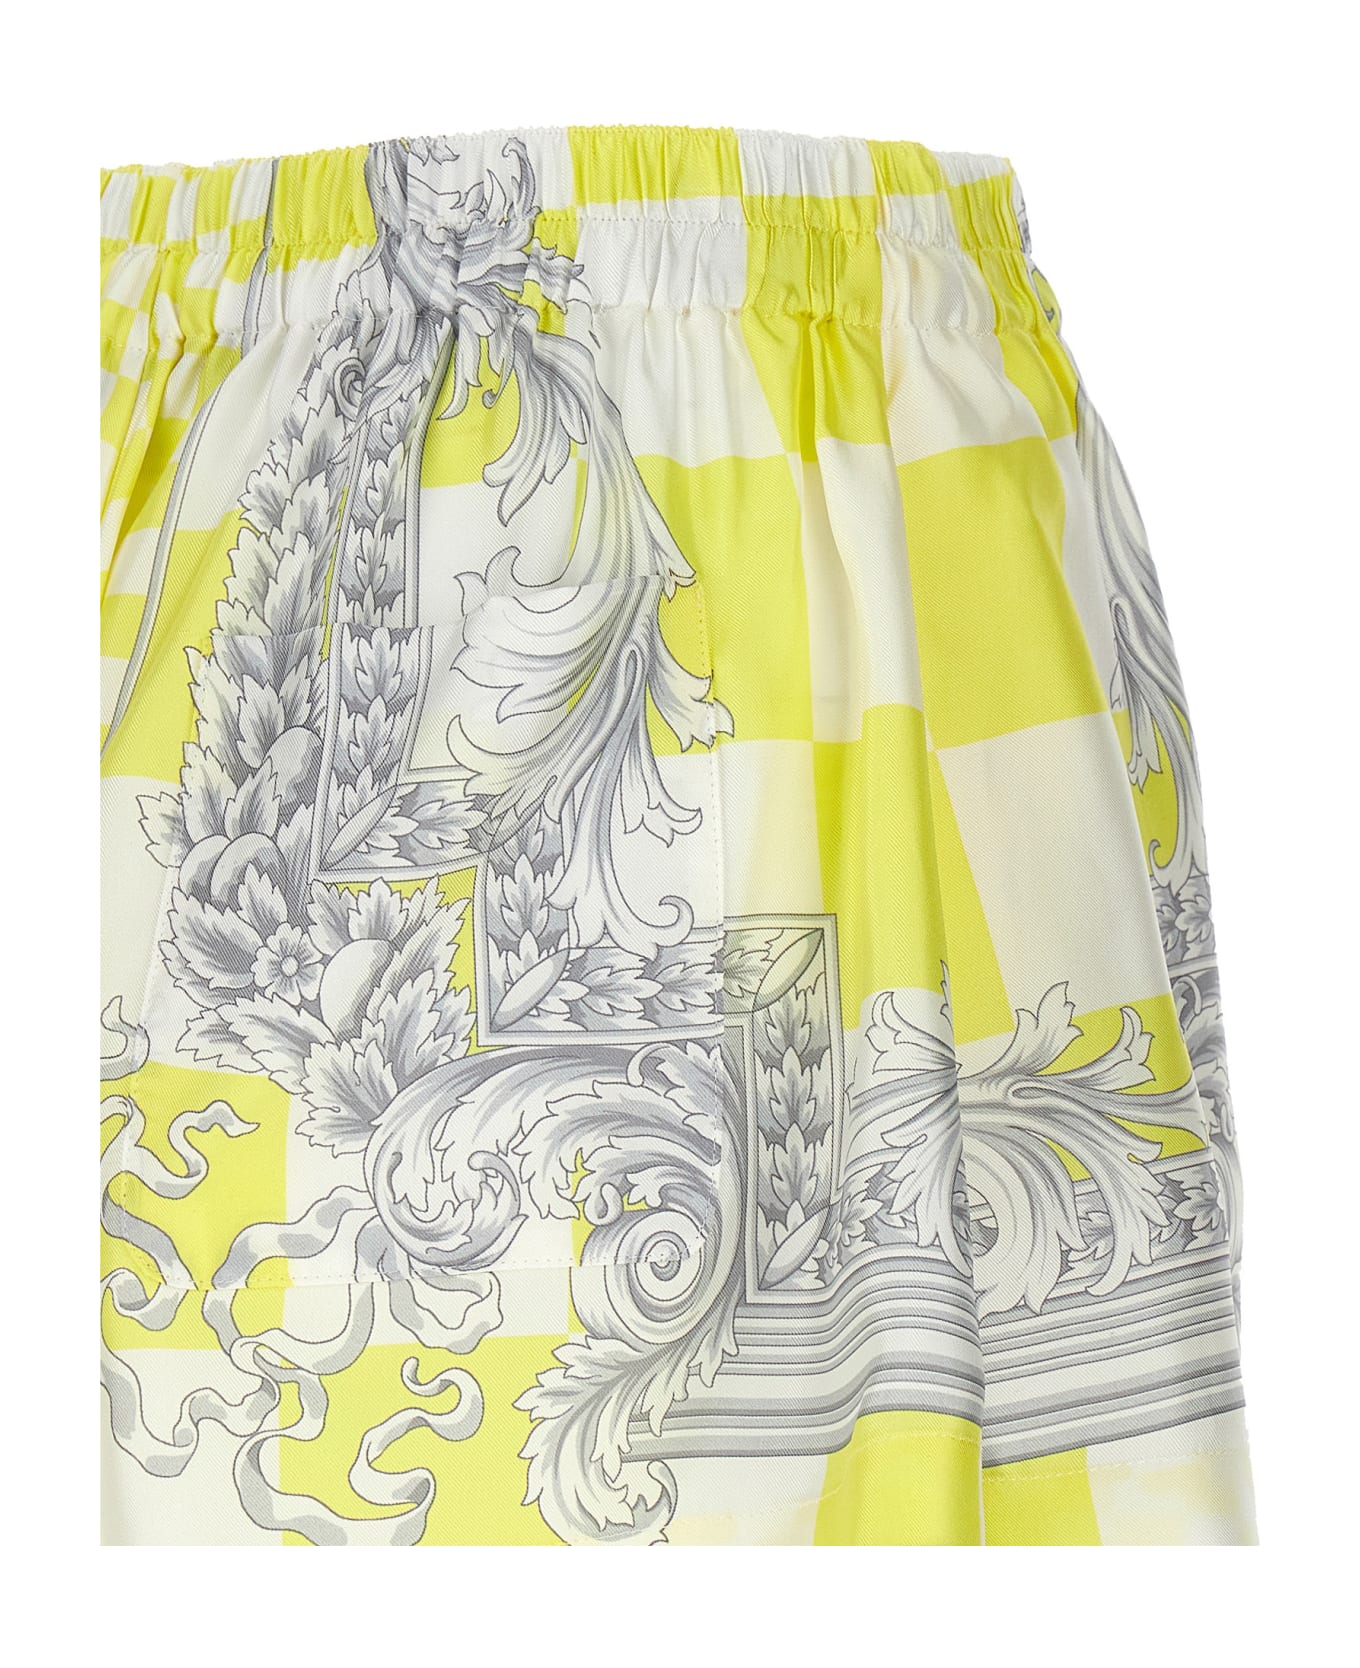 Versace 'medusa Contrasto' Shorts - Yellow